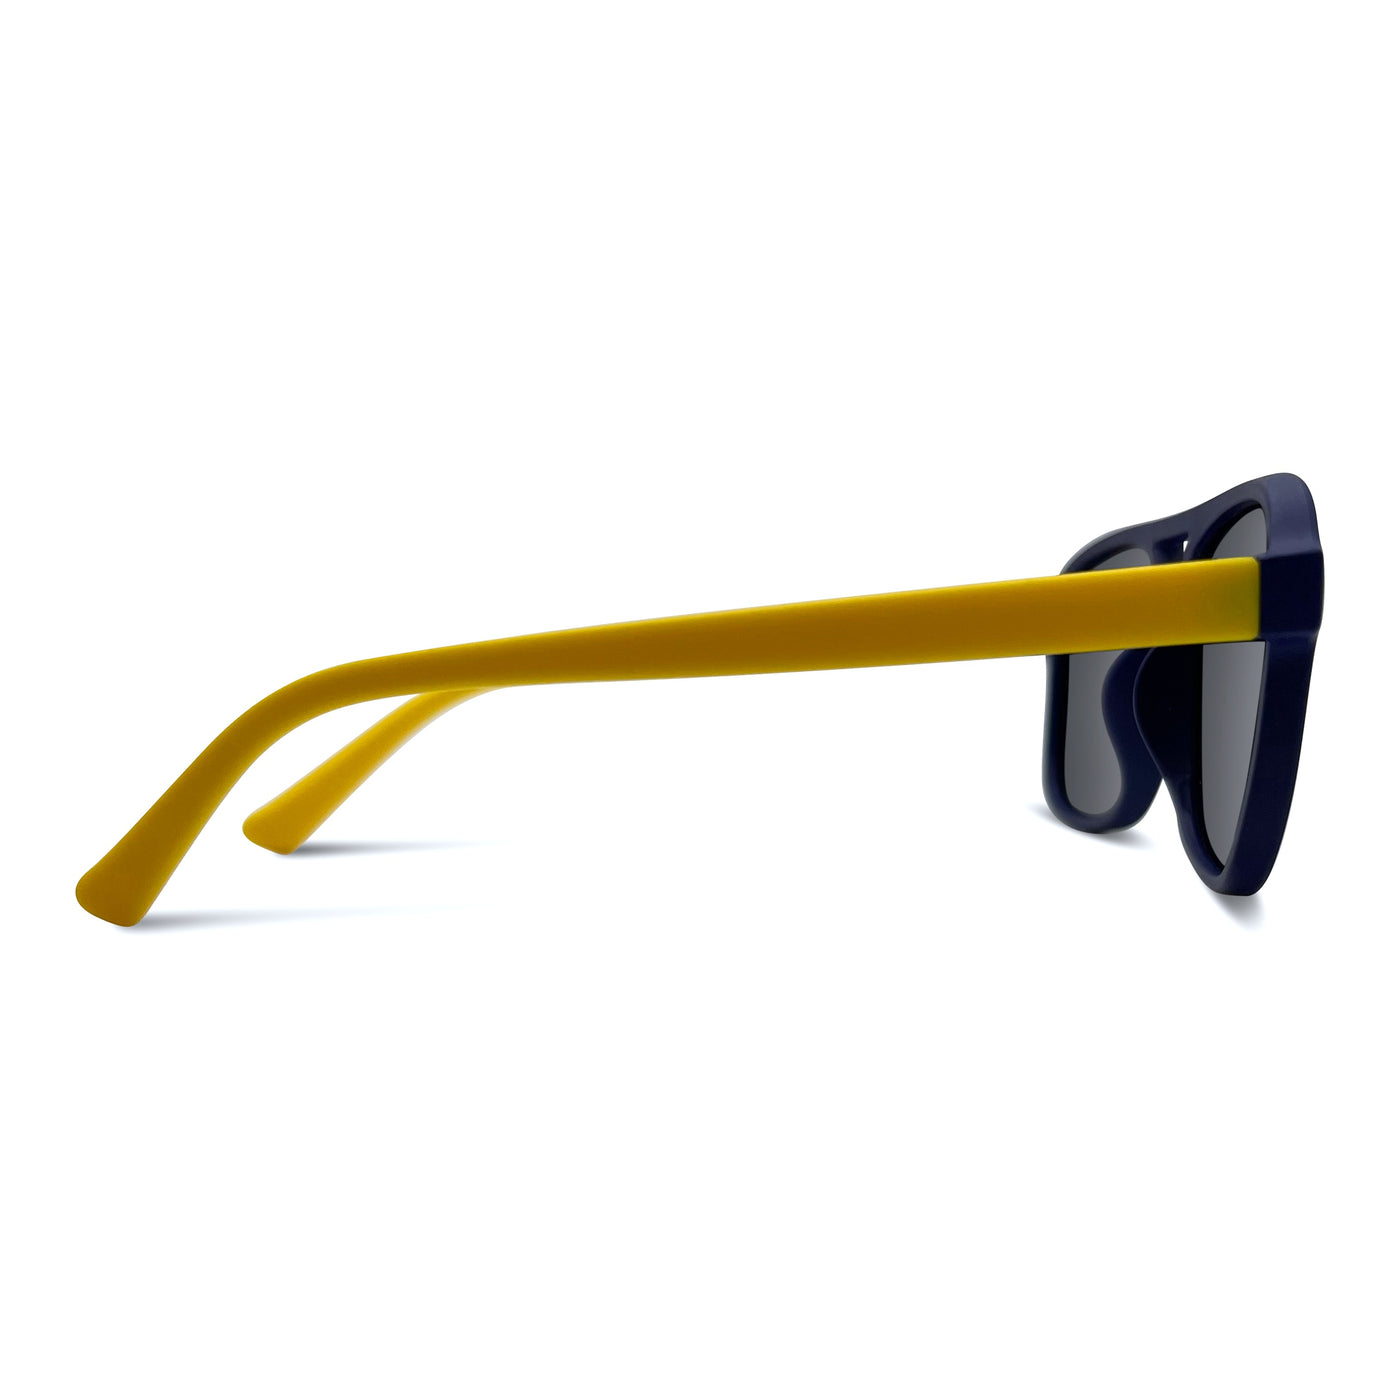 SATURDAZE Optics polarized kids yellow & navy blue frame sunglasses - COOL KID ON THE BLOCK